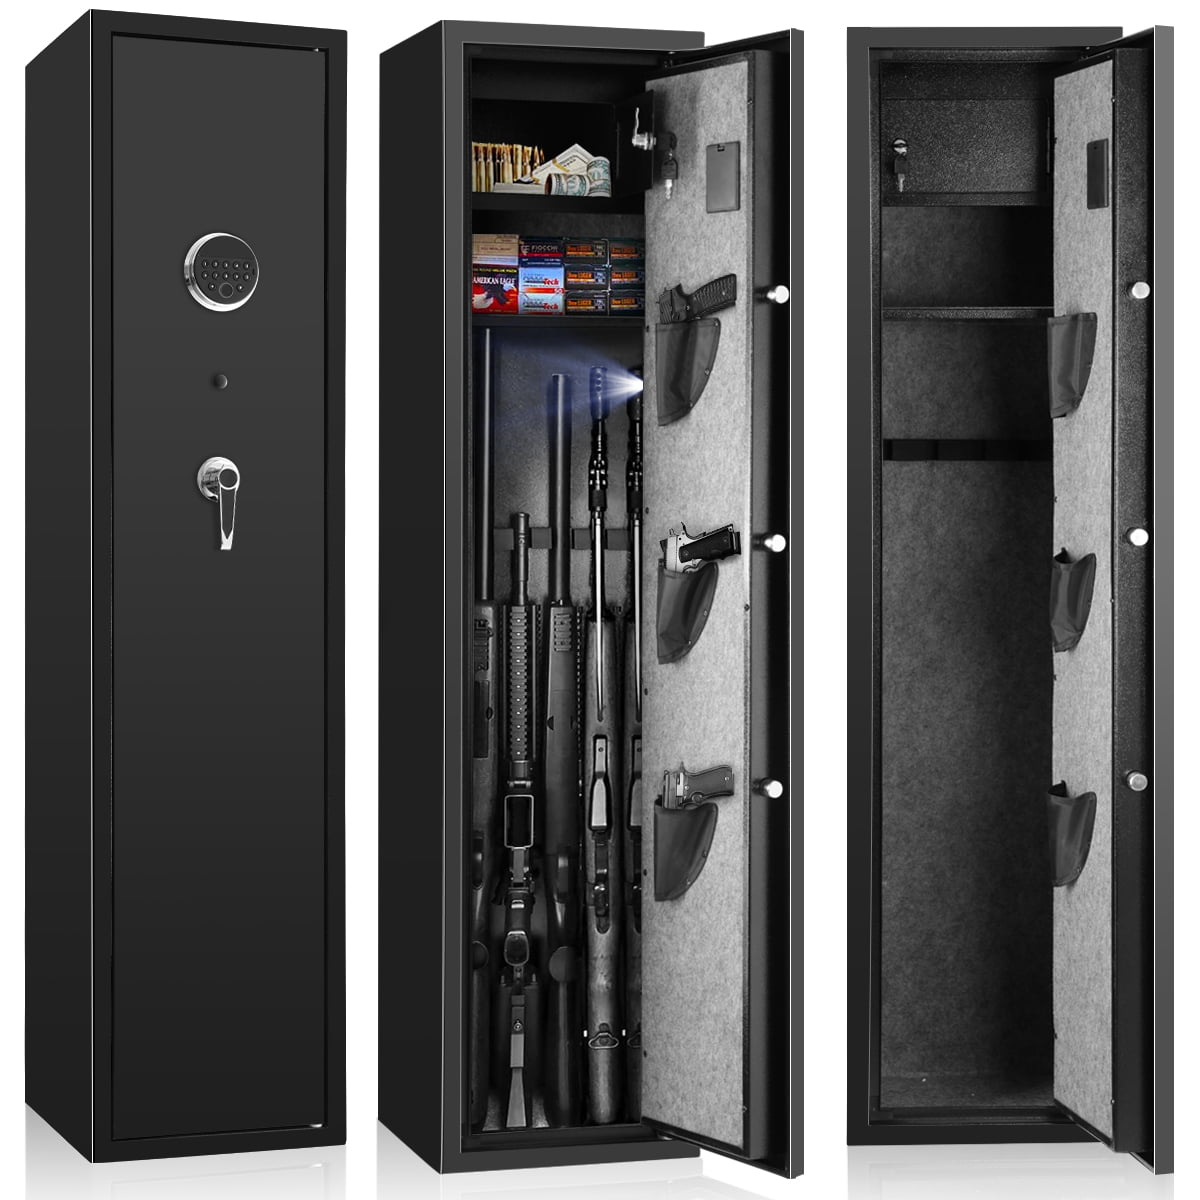 Stack-On 8-Gun Cabinet Security Safe Rifles Short Gun Key Coded Lock Storage NEW 